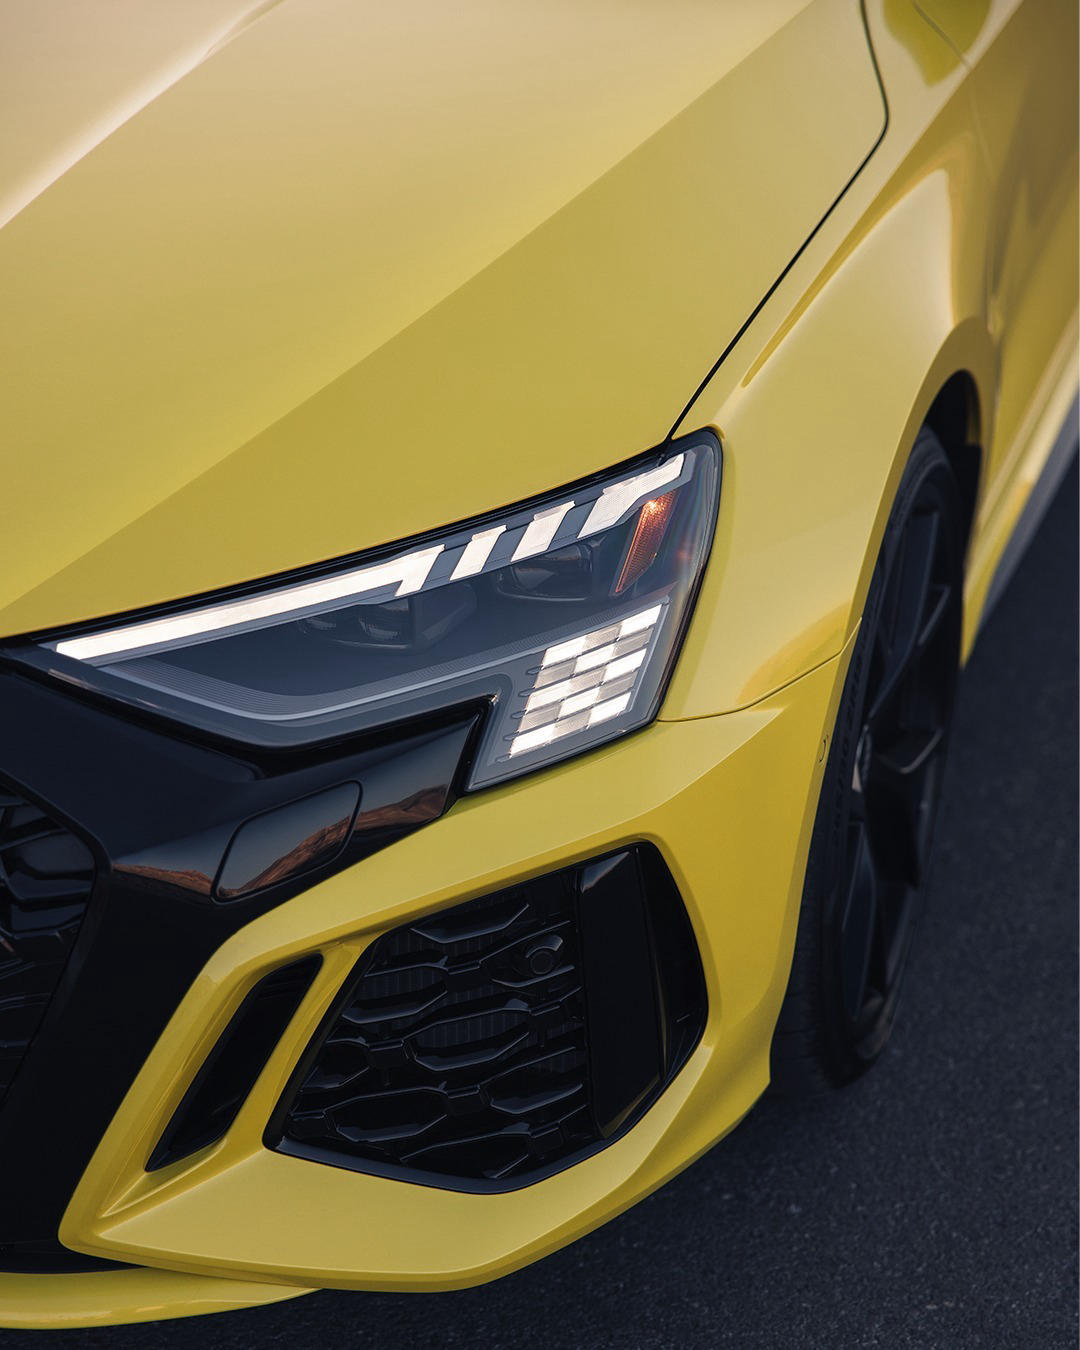 Audi USA - The Audi RS 3